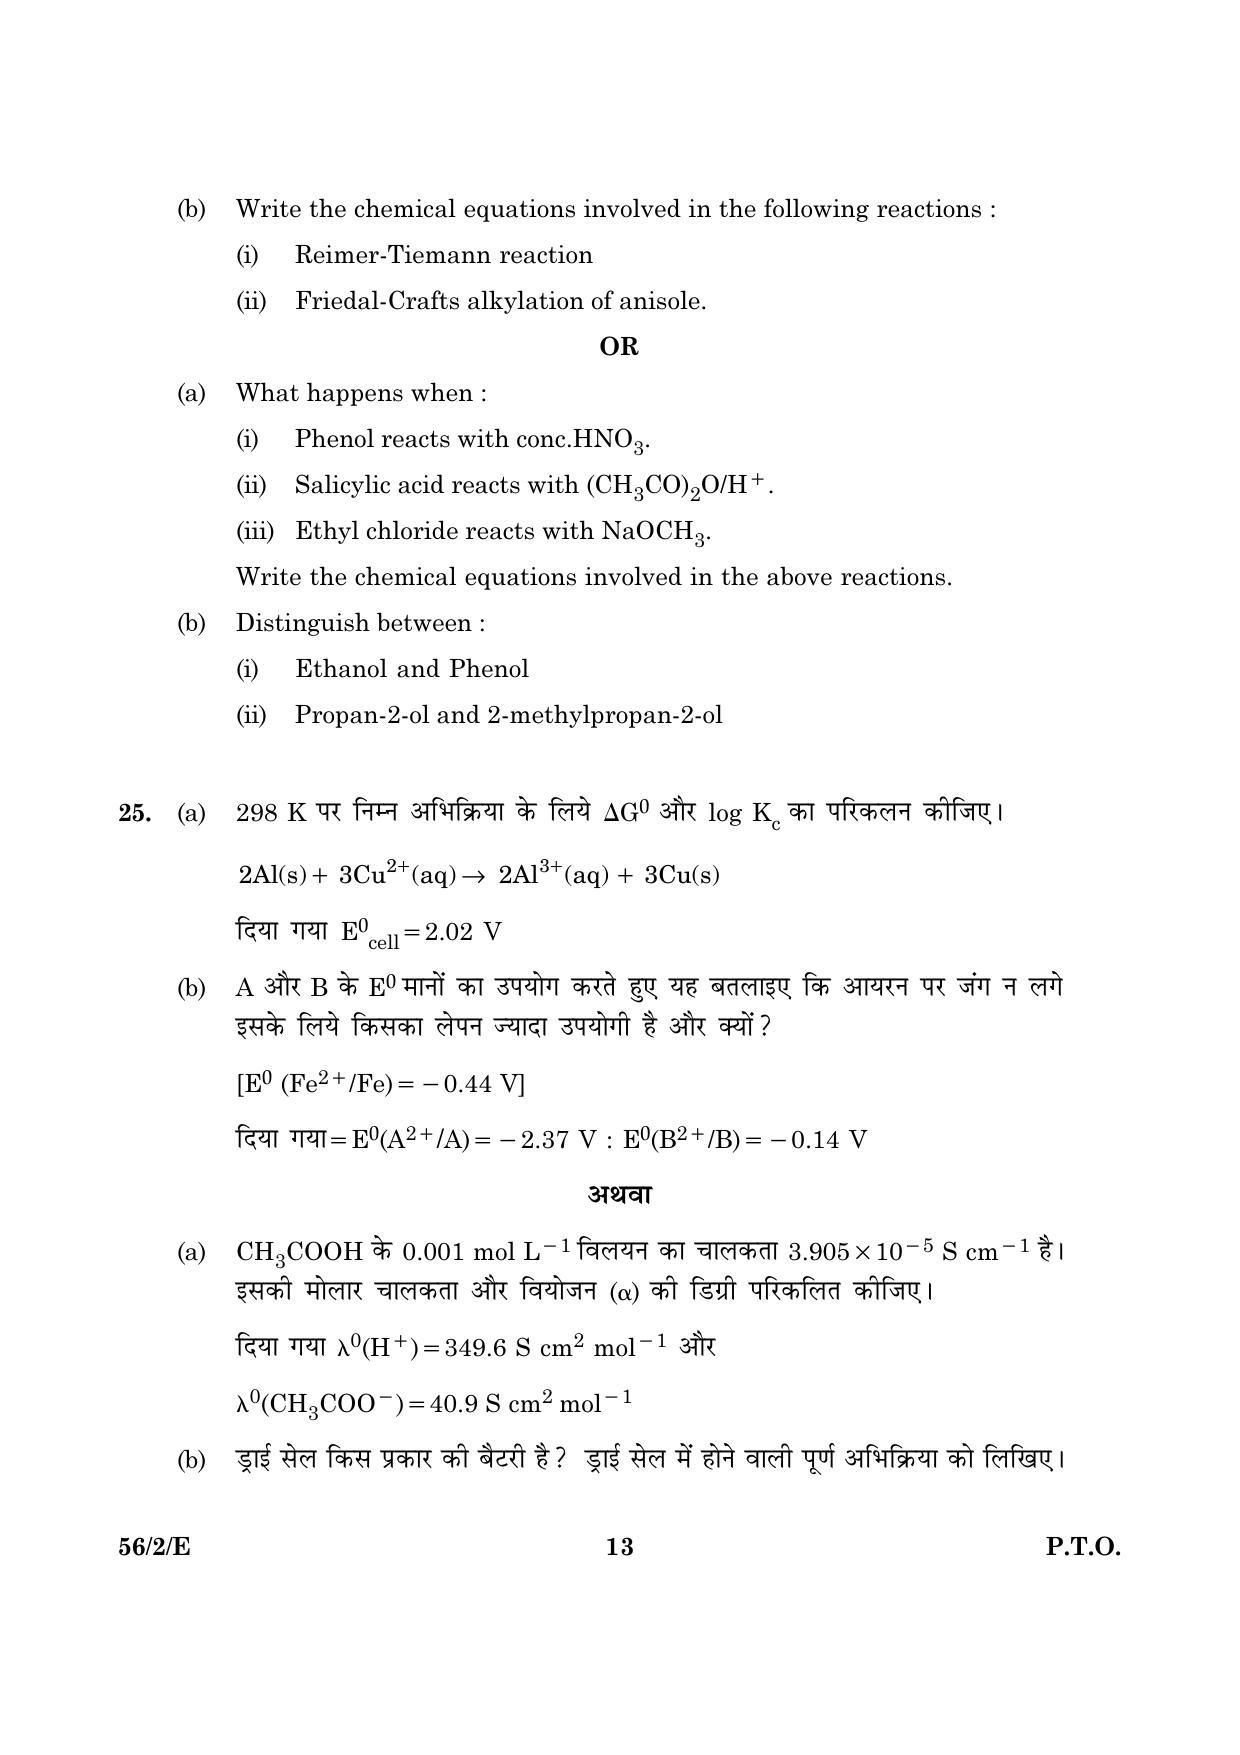 CBSE Class 12 056 Set 2 E Chemistry 2016 Question Paper - Page 13